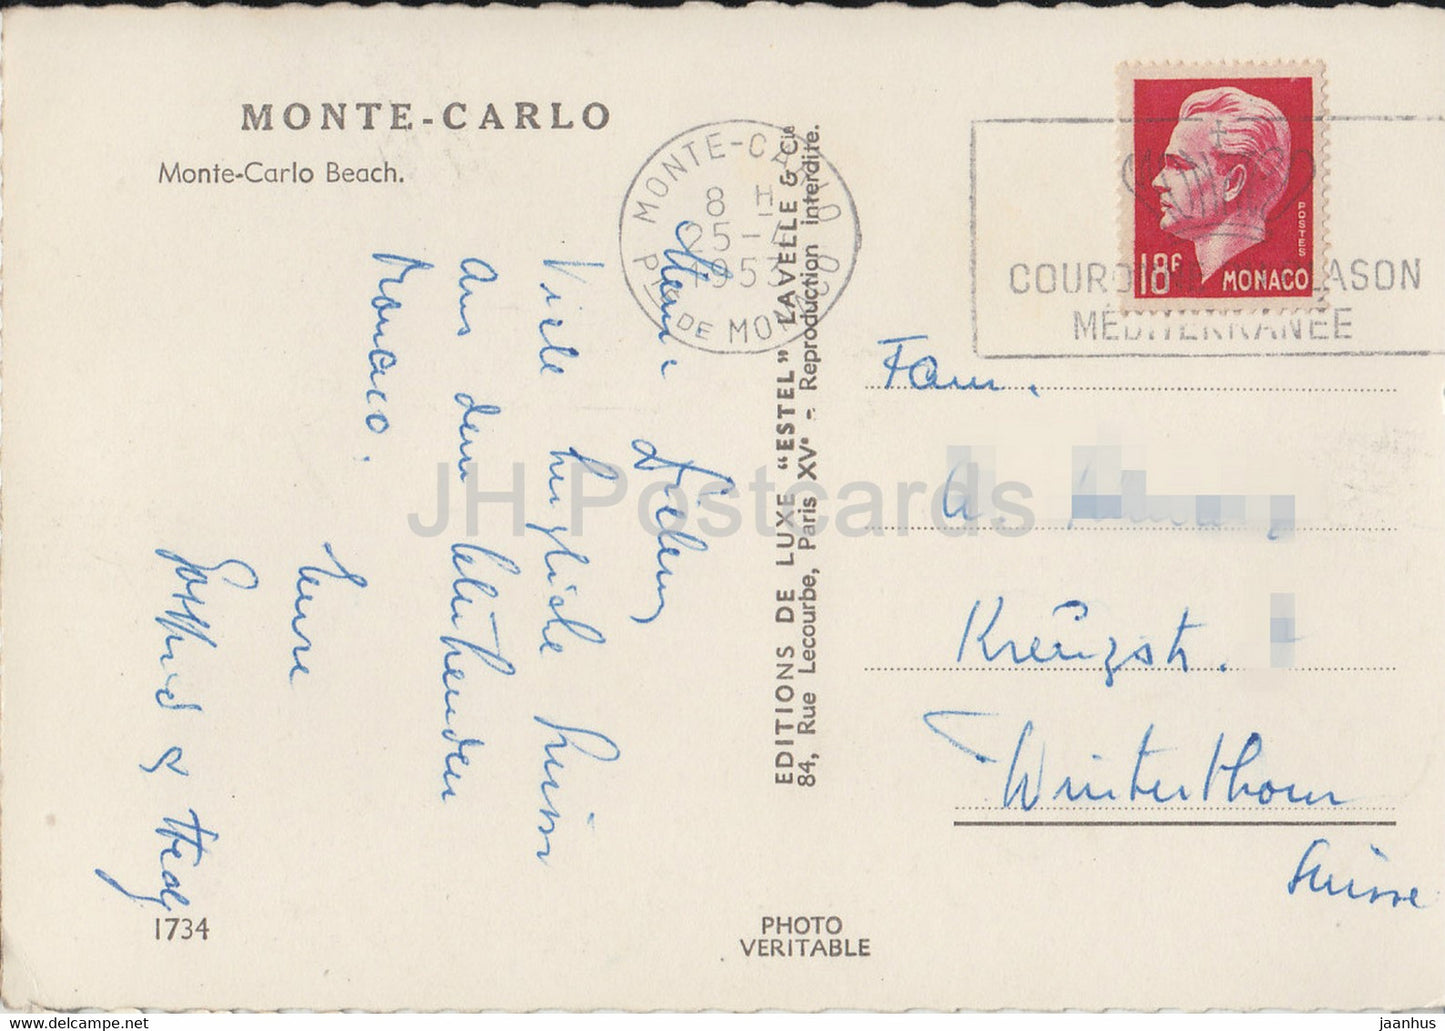 Monte Carlo Beach - old postcard - 1953 - Monaco - used